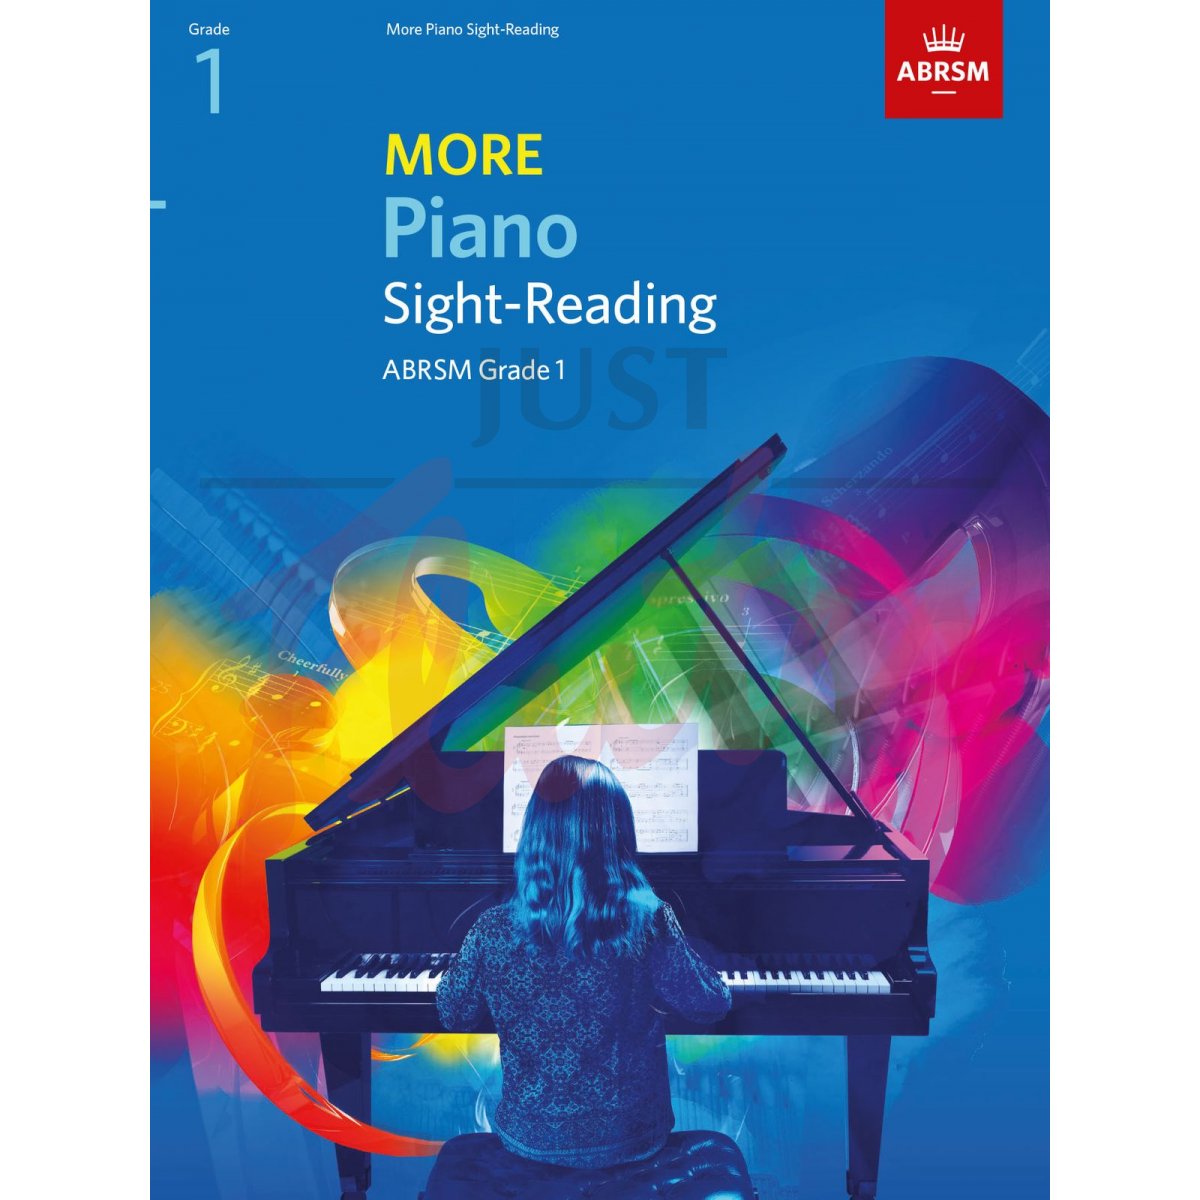 More Piano Sight-Reading Grade 1